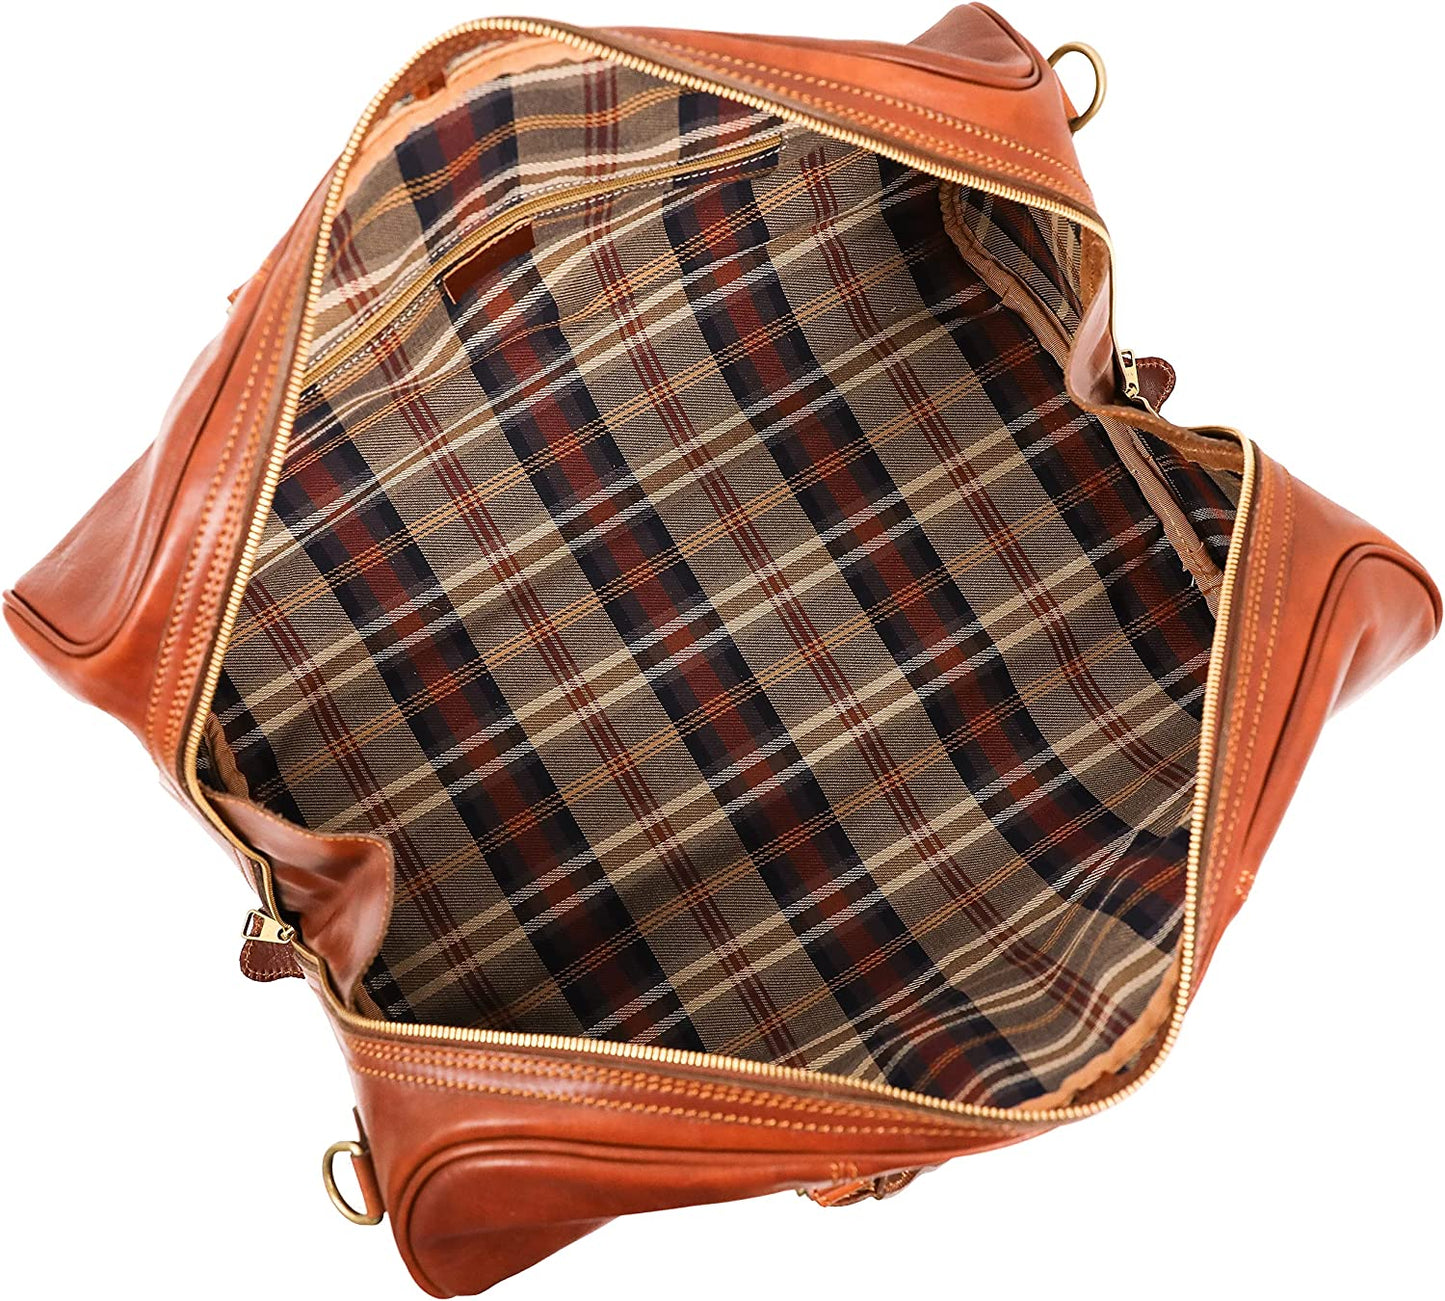 Leather Travel Bag Duffel Bag Full Grain Leather Weekender -  (Cognac)